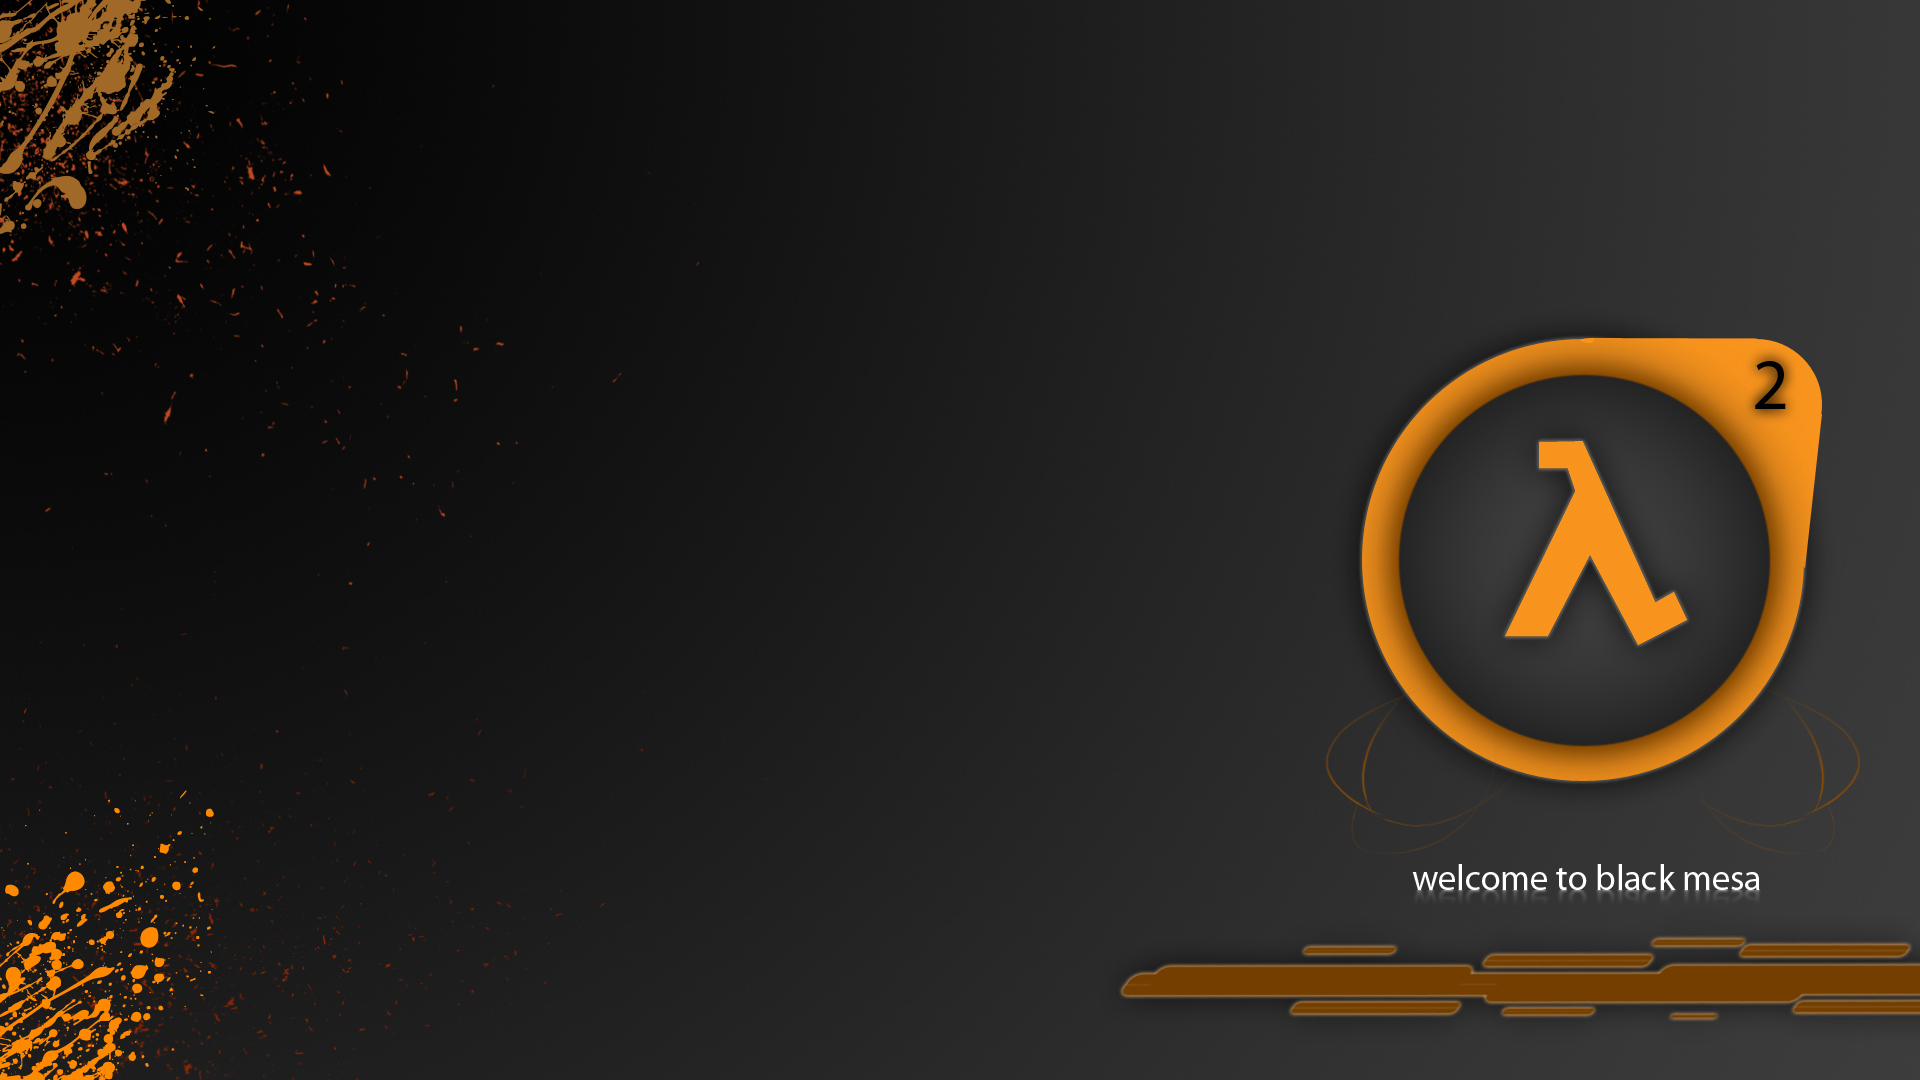 Корпорация Valve, минималистичный, Период полураспада, Black Mesa - обои на рабочий стол